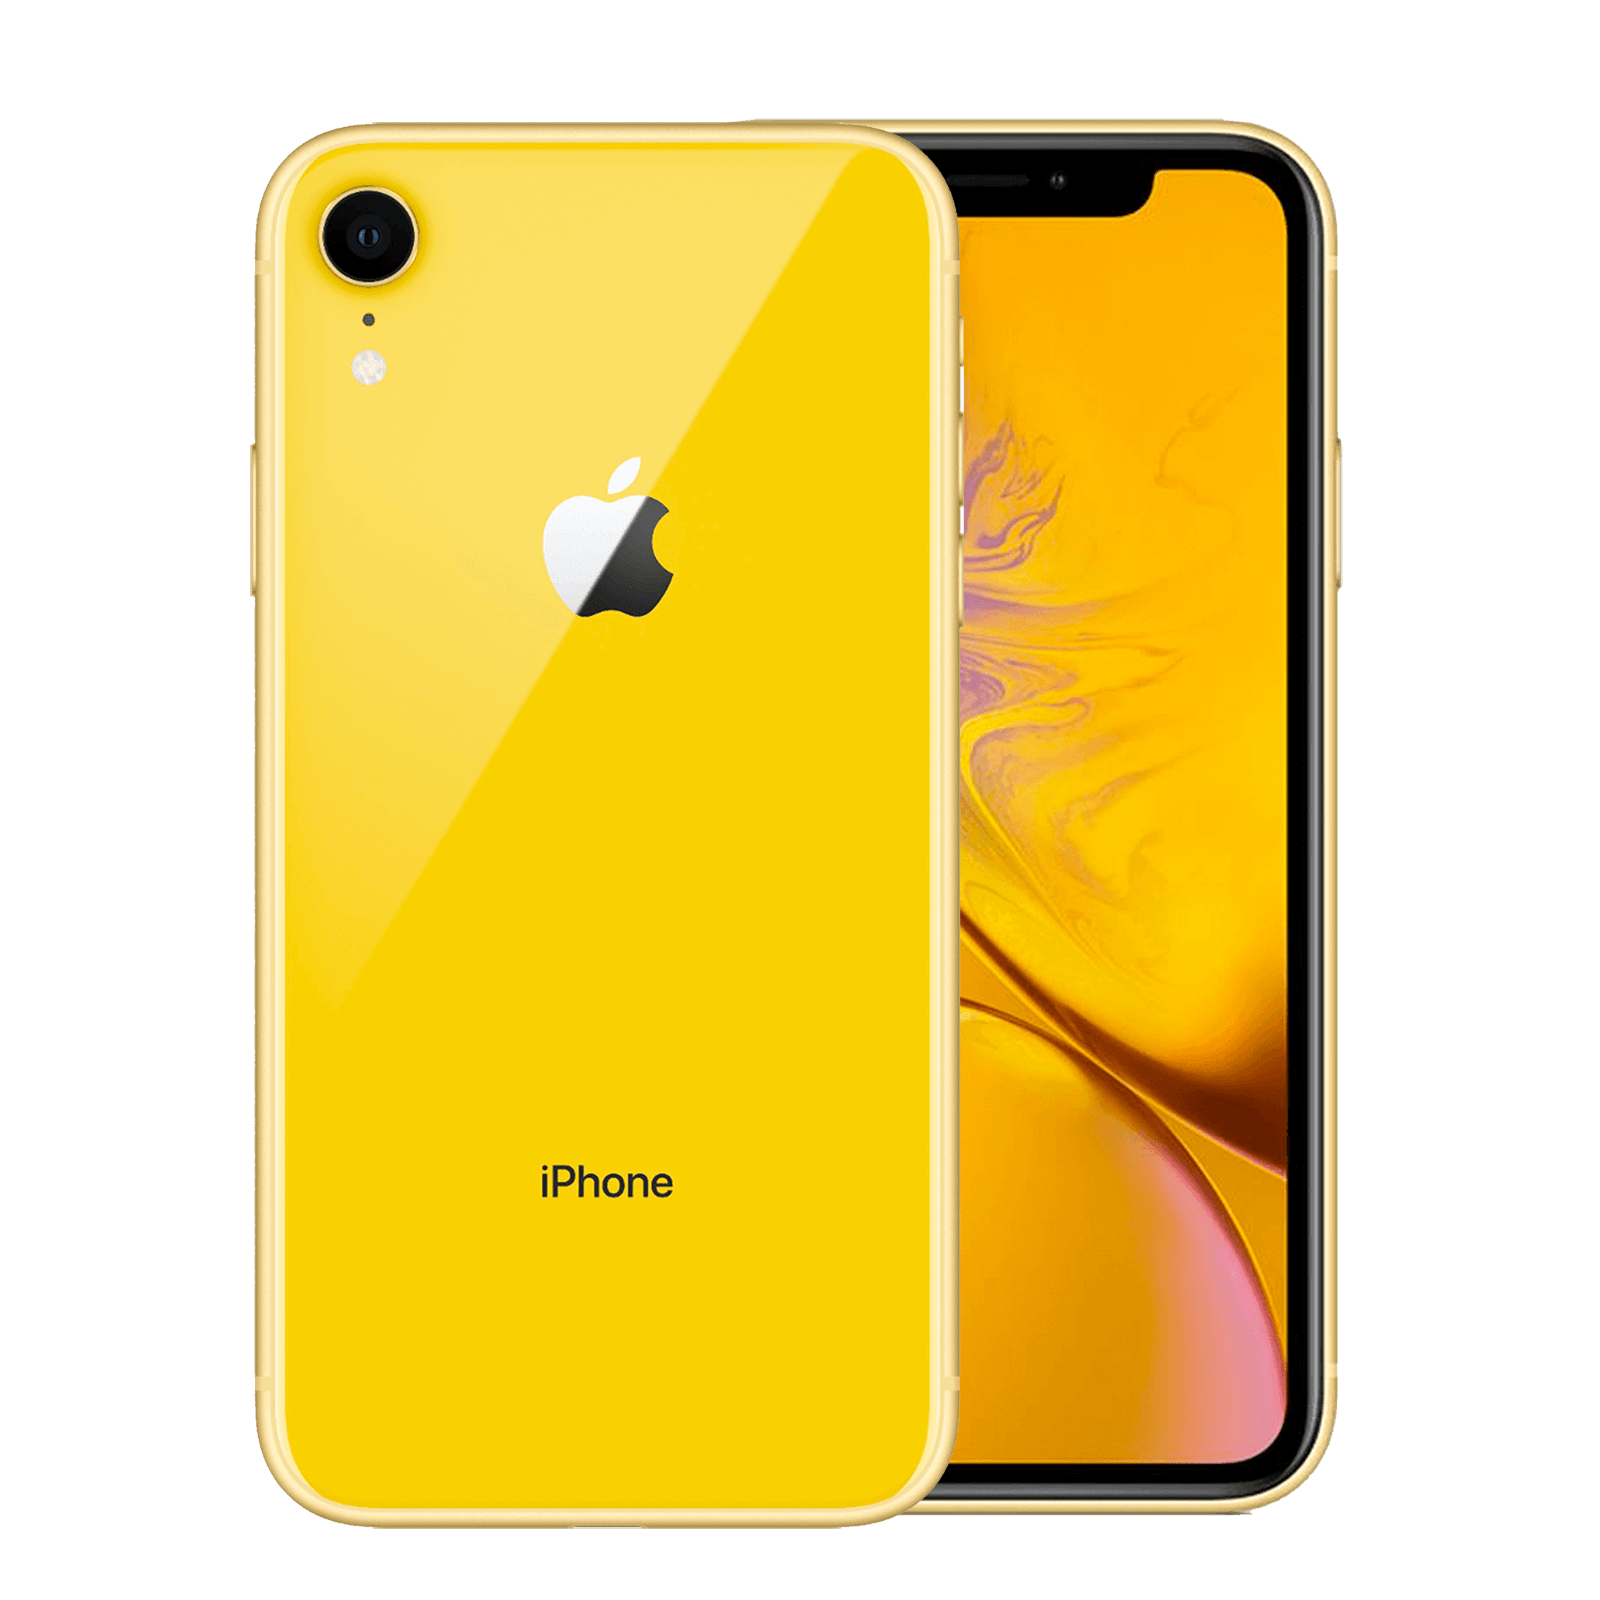 Apple iPhone XR 64GB Yellow Very Good - Unlocked